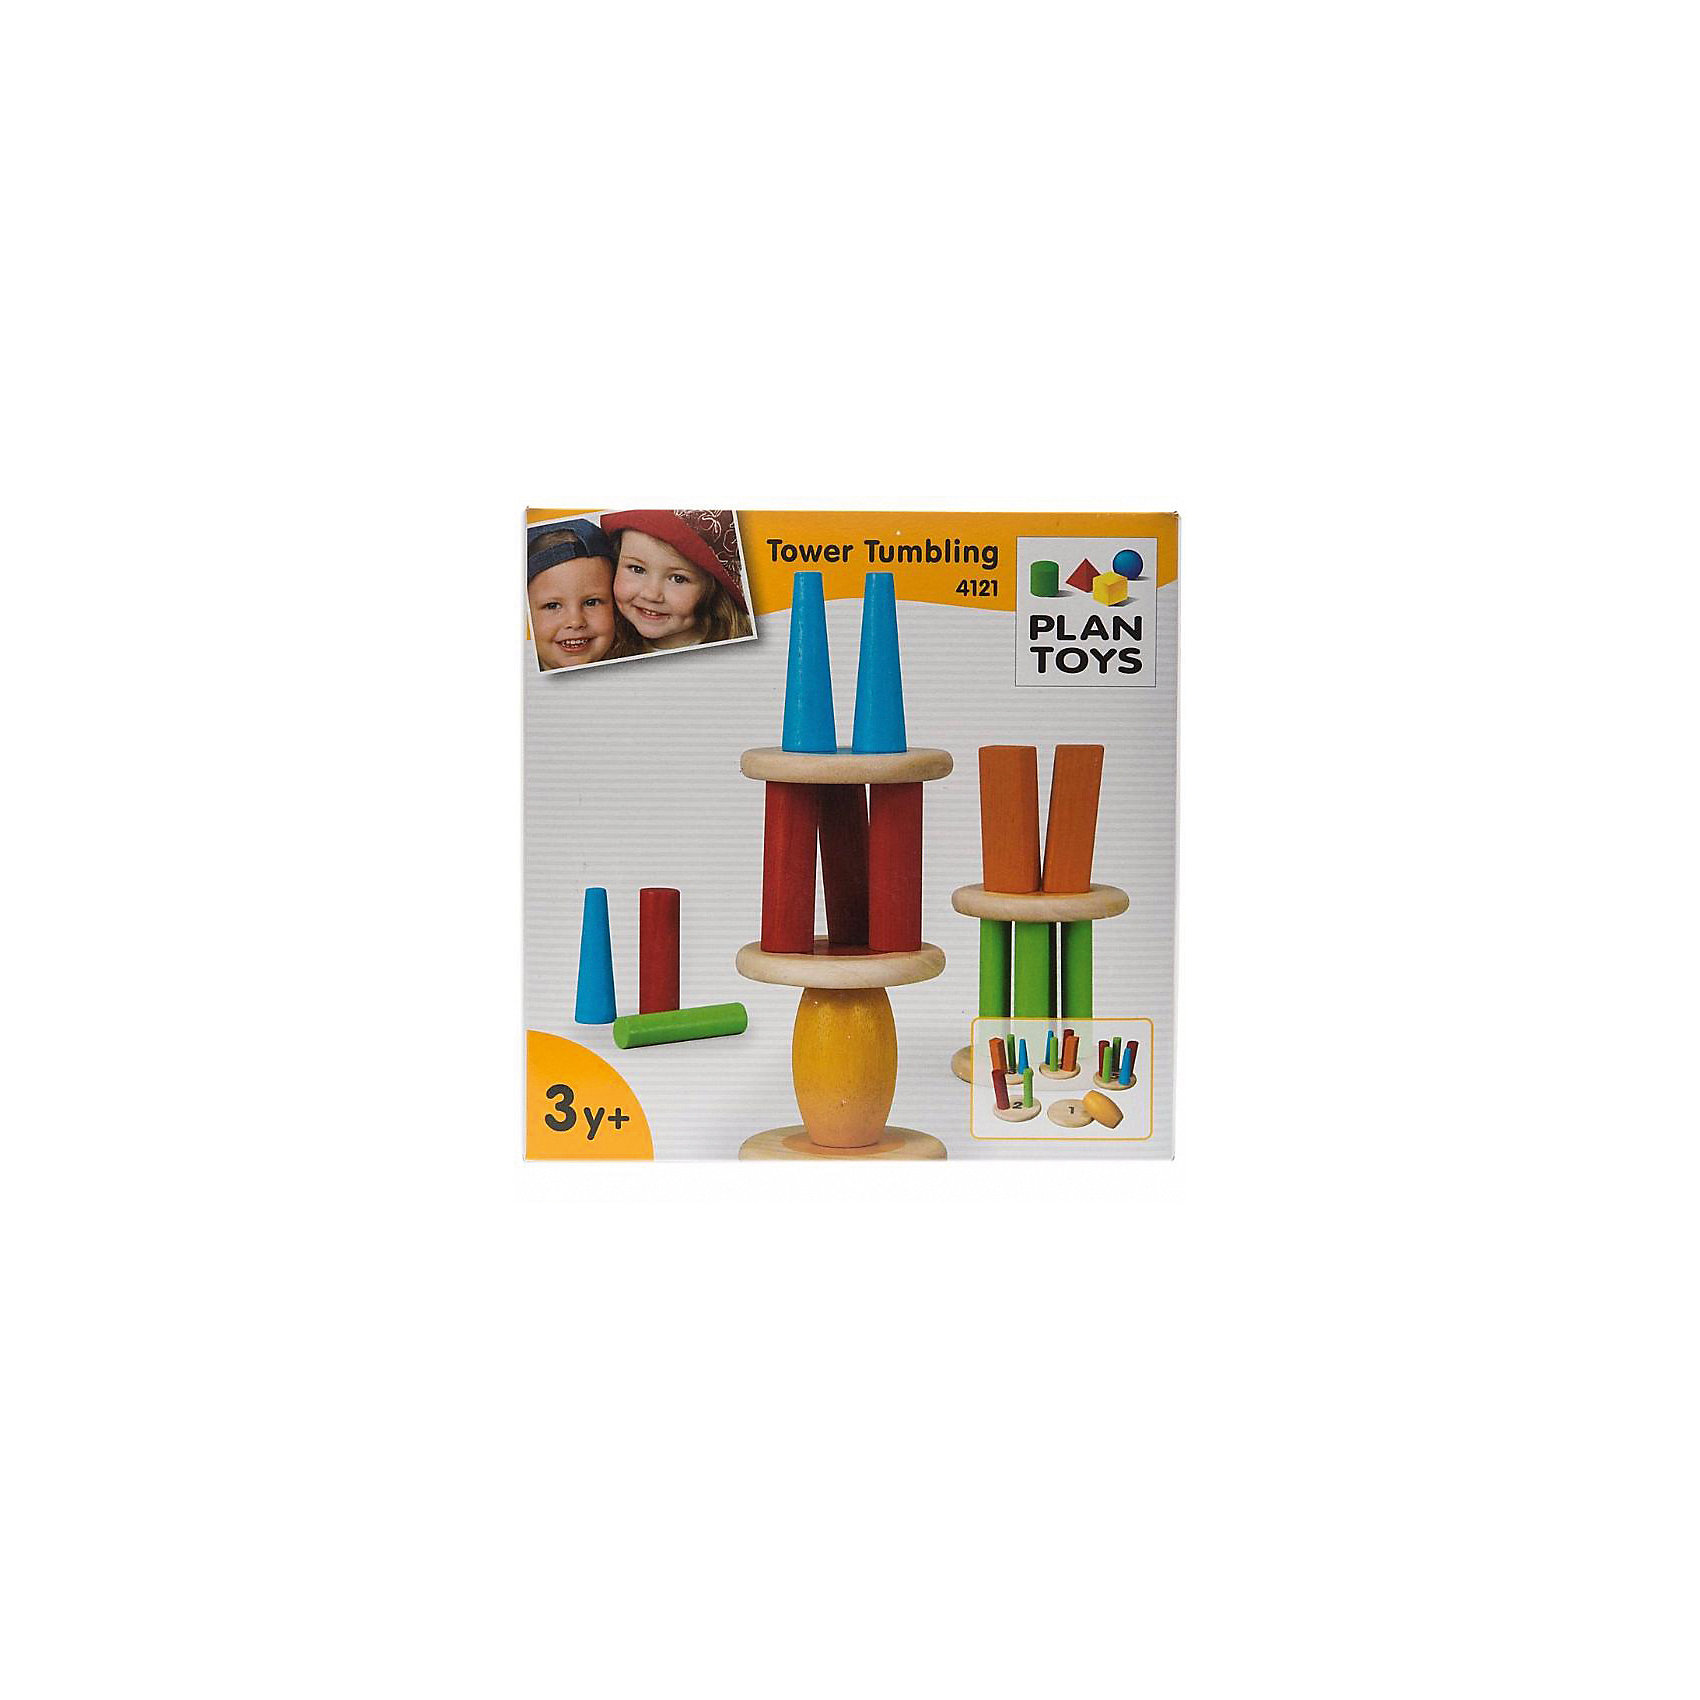 Tower toys. Plan Toys башня Тумблинг 4121. Пластиковая оранжевая башенка игрушка. Игрушка башня по размеру. RN Toys башня буковая д-771.